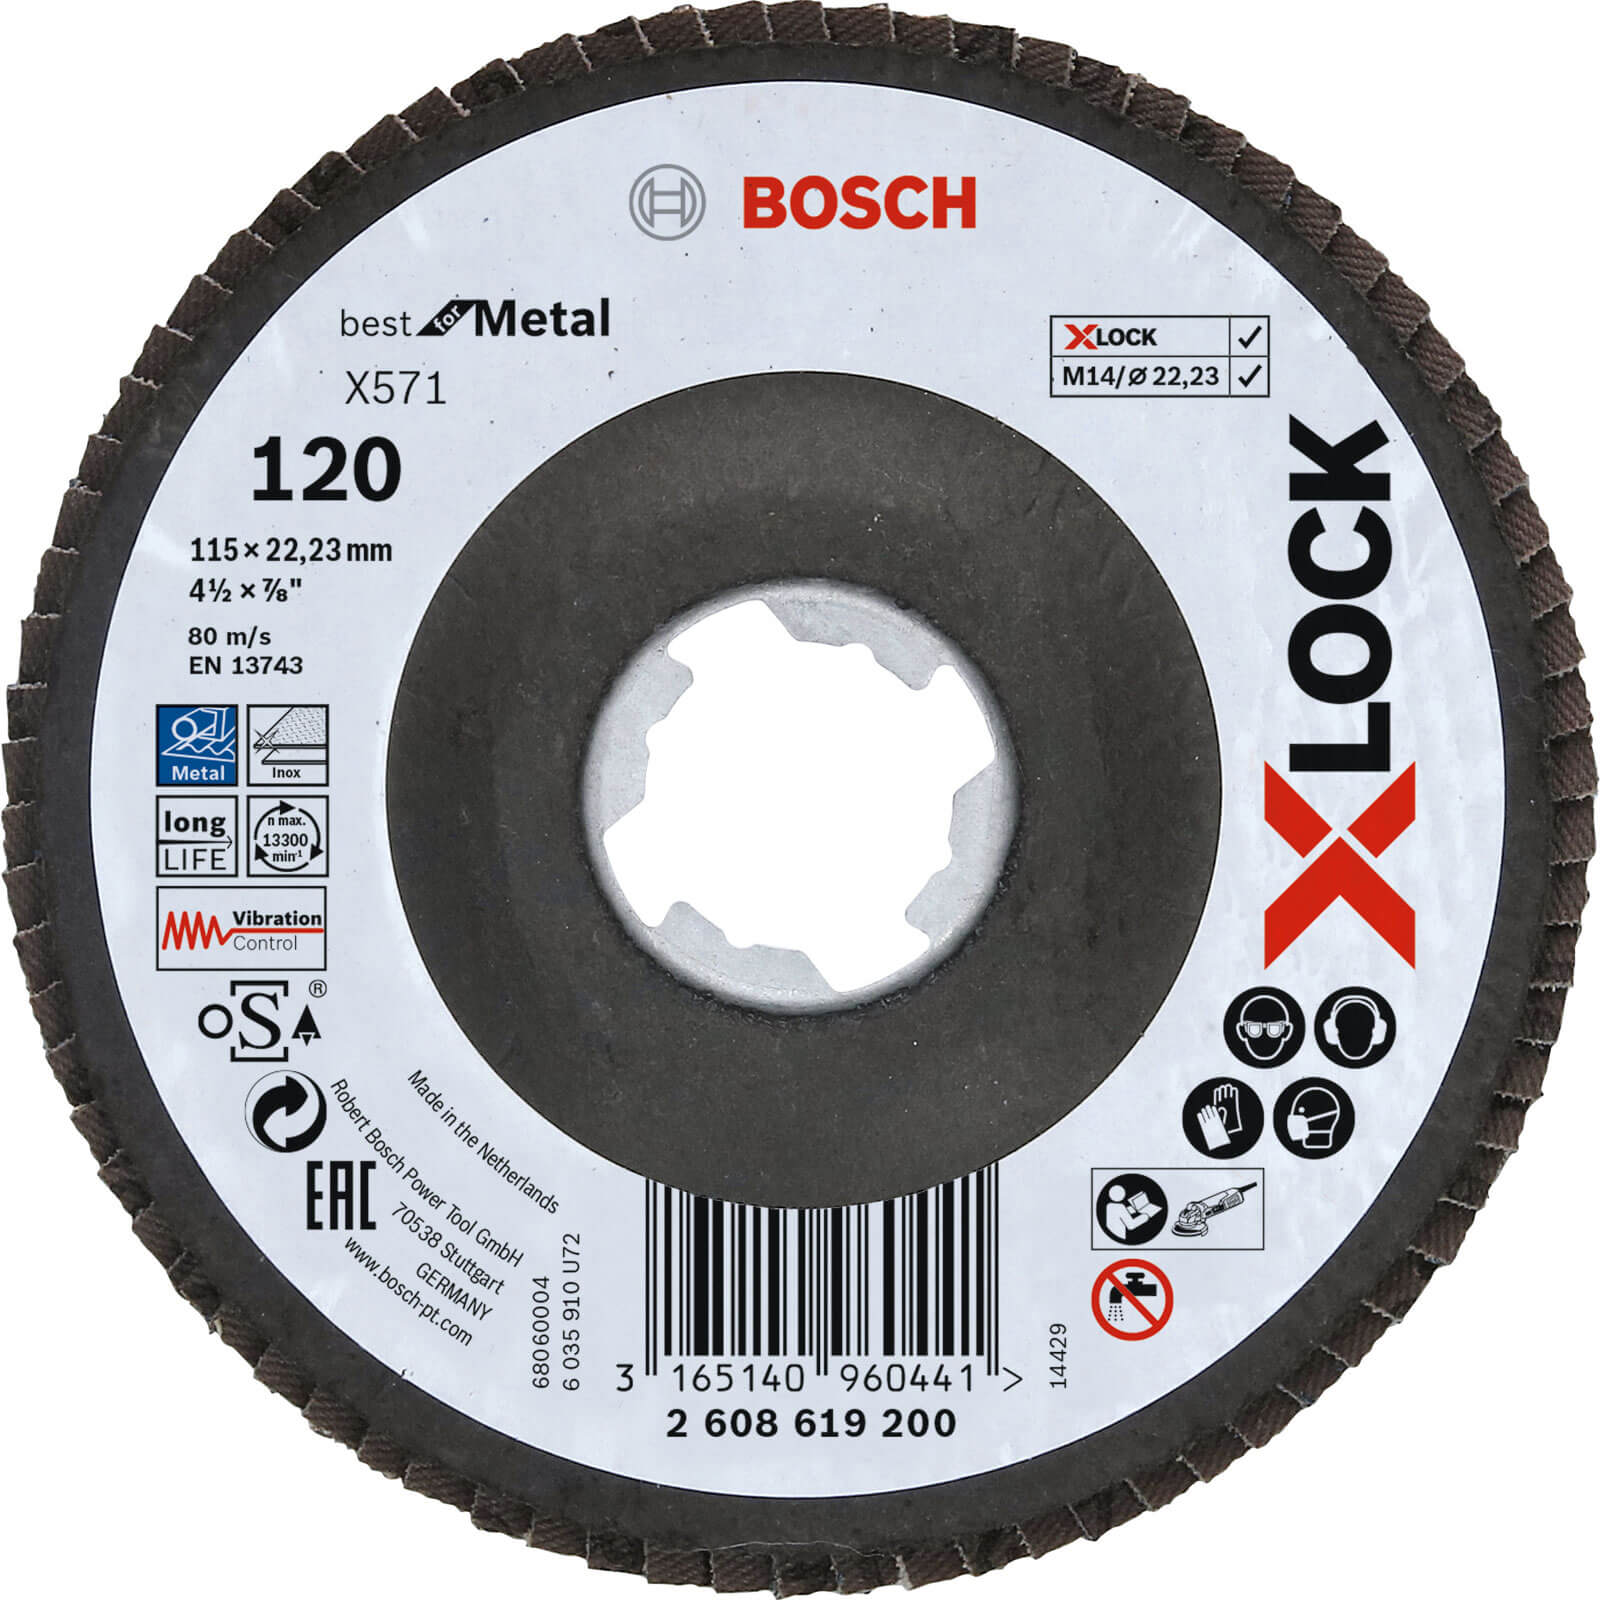 Image of Bosch X Lock Zirconium Abrasive Flap Disc 115mm 120g Pack of 1